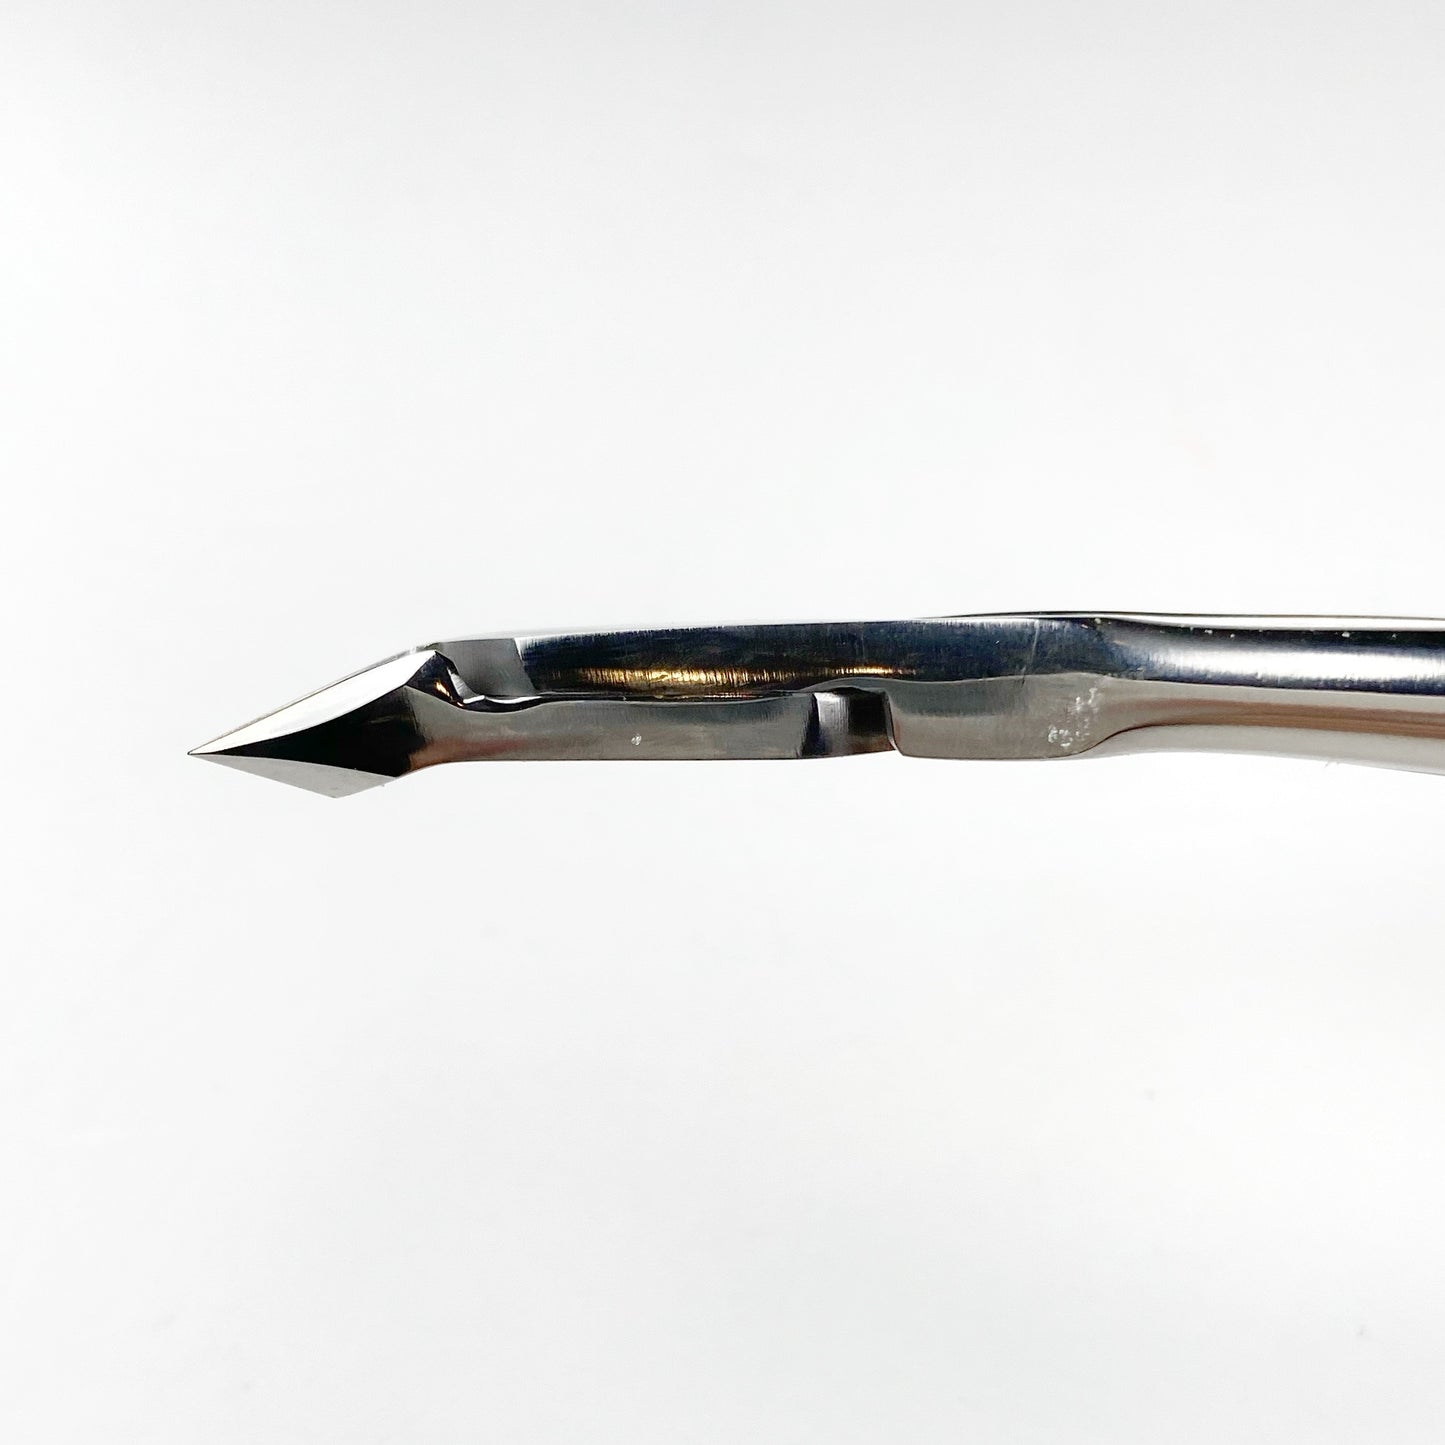 STALEKS PRO Expert Cuticle Nippers, model NE-80-6 (6mm edge)